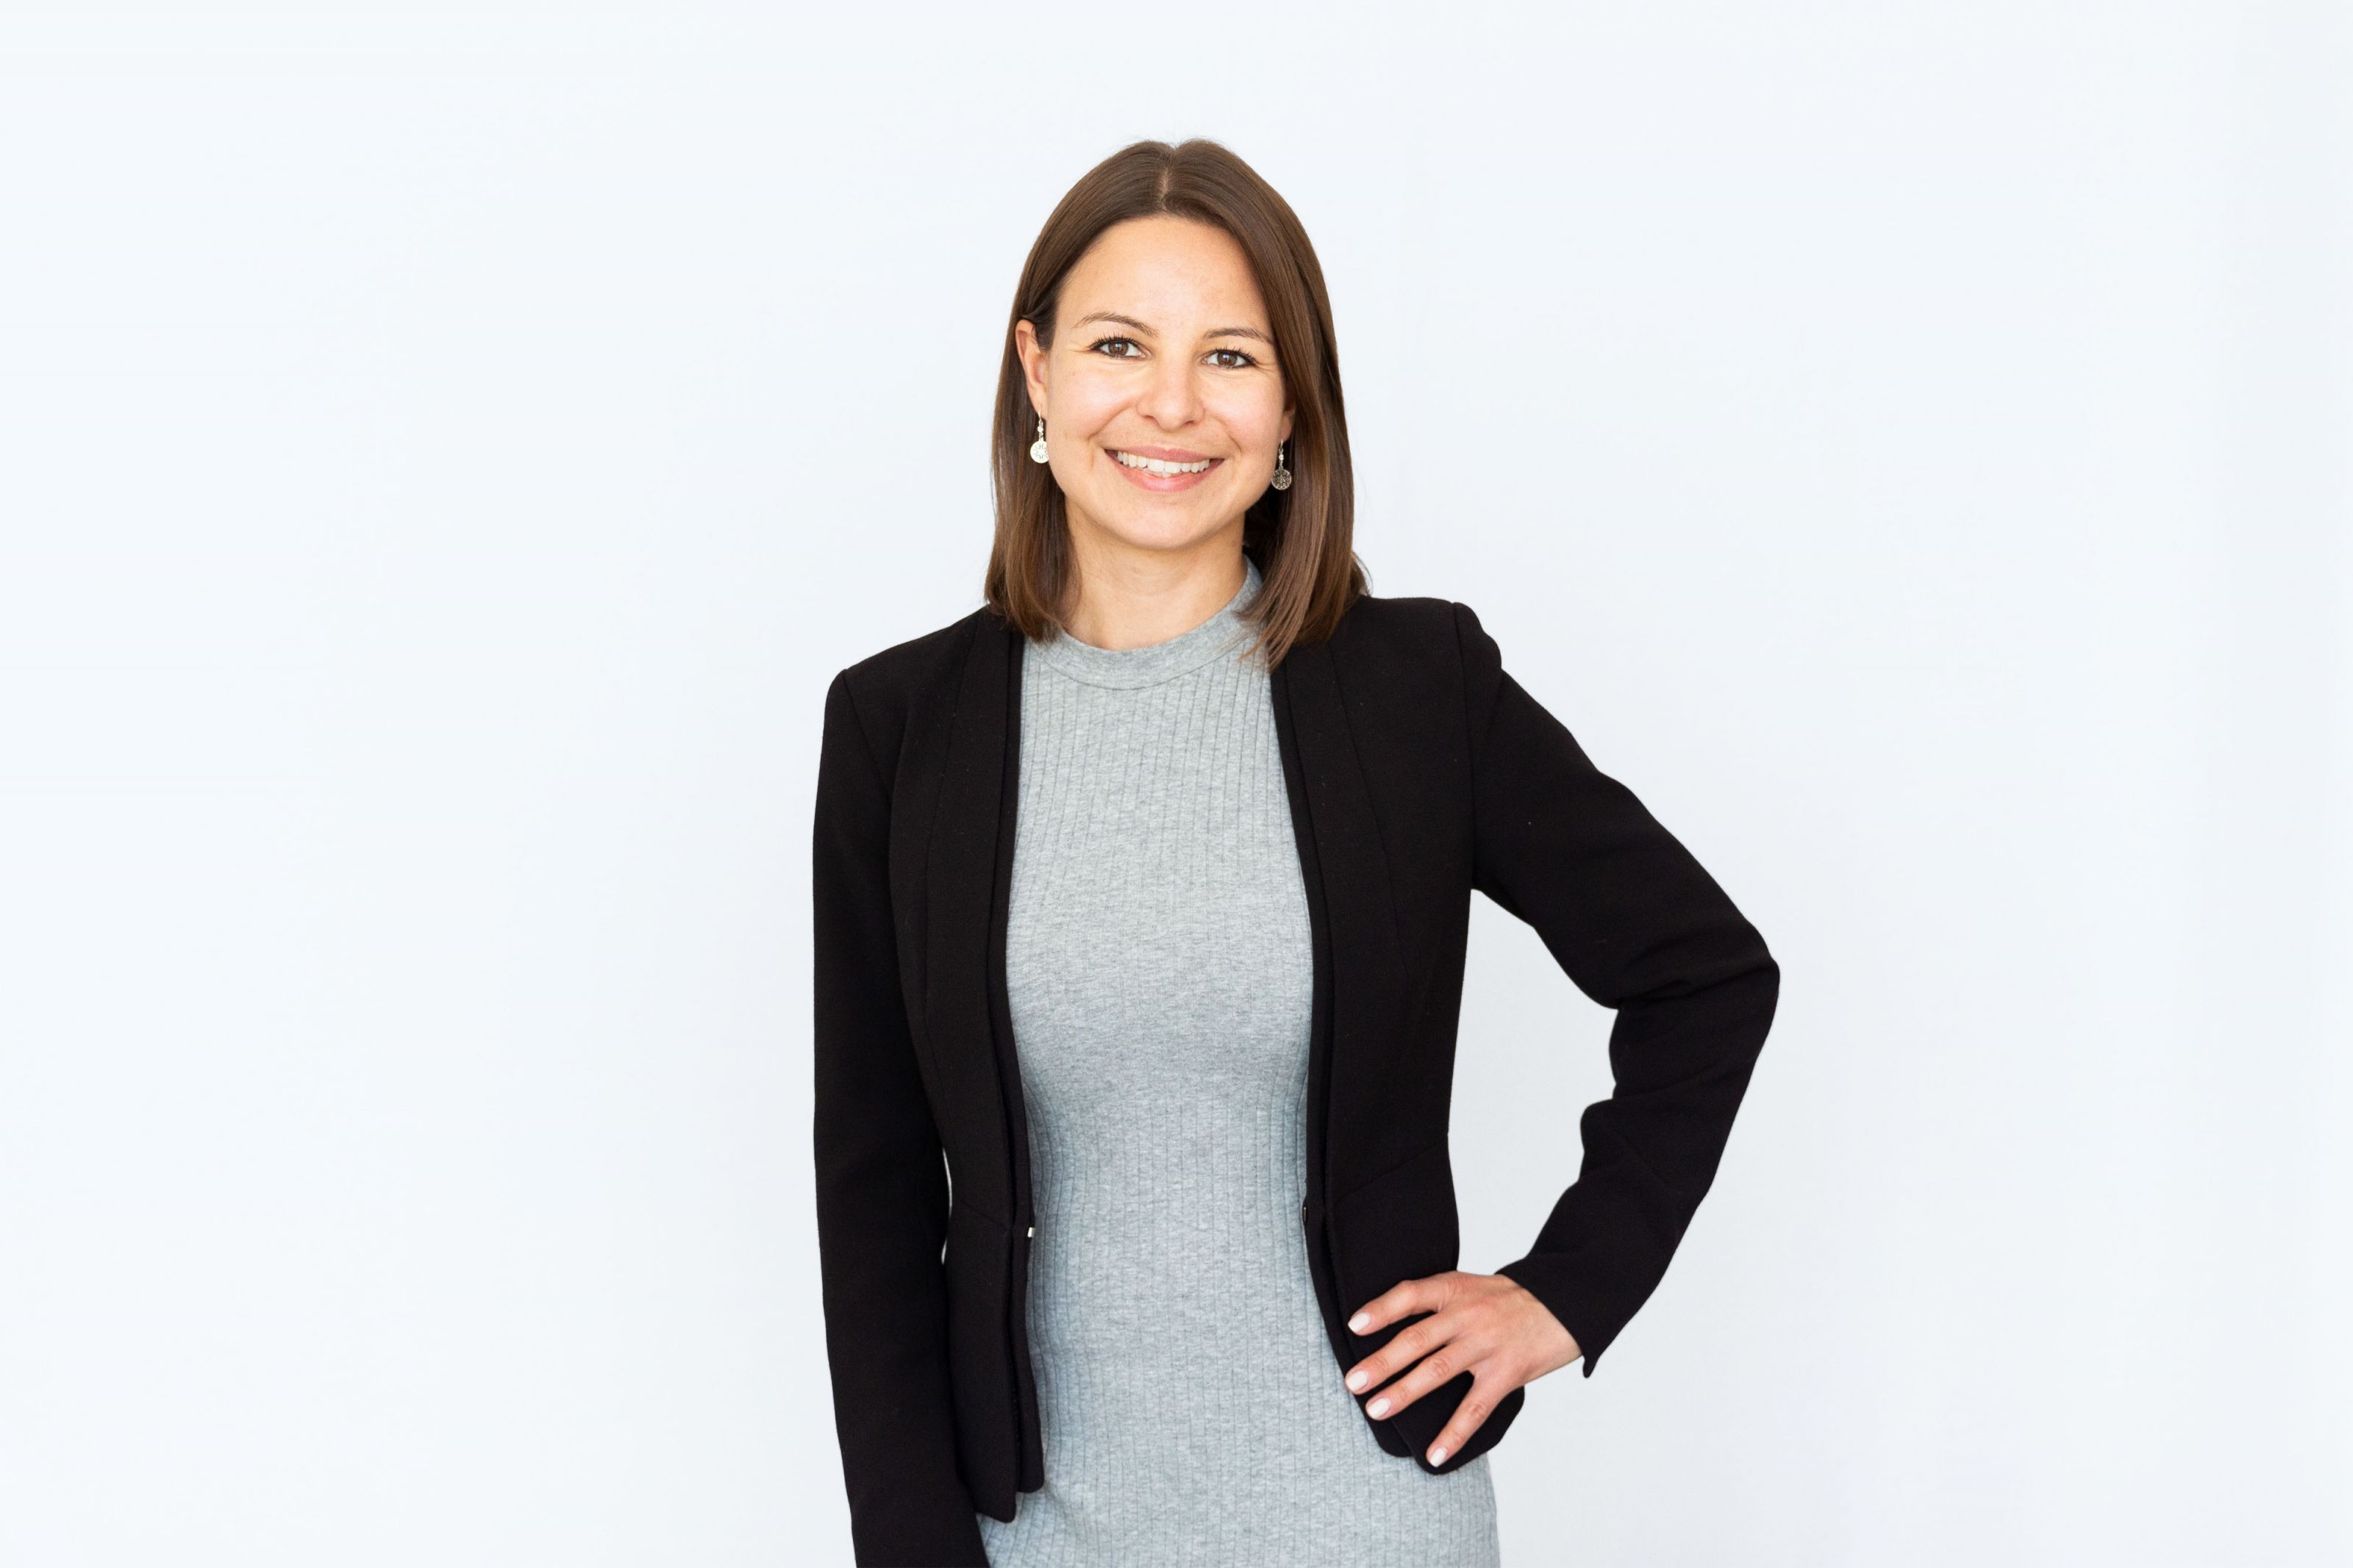 Nathalie Brescia ist Senior Marketing Manager (Events) bei Namics